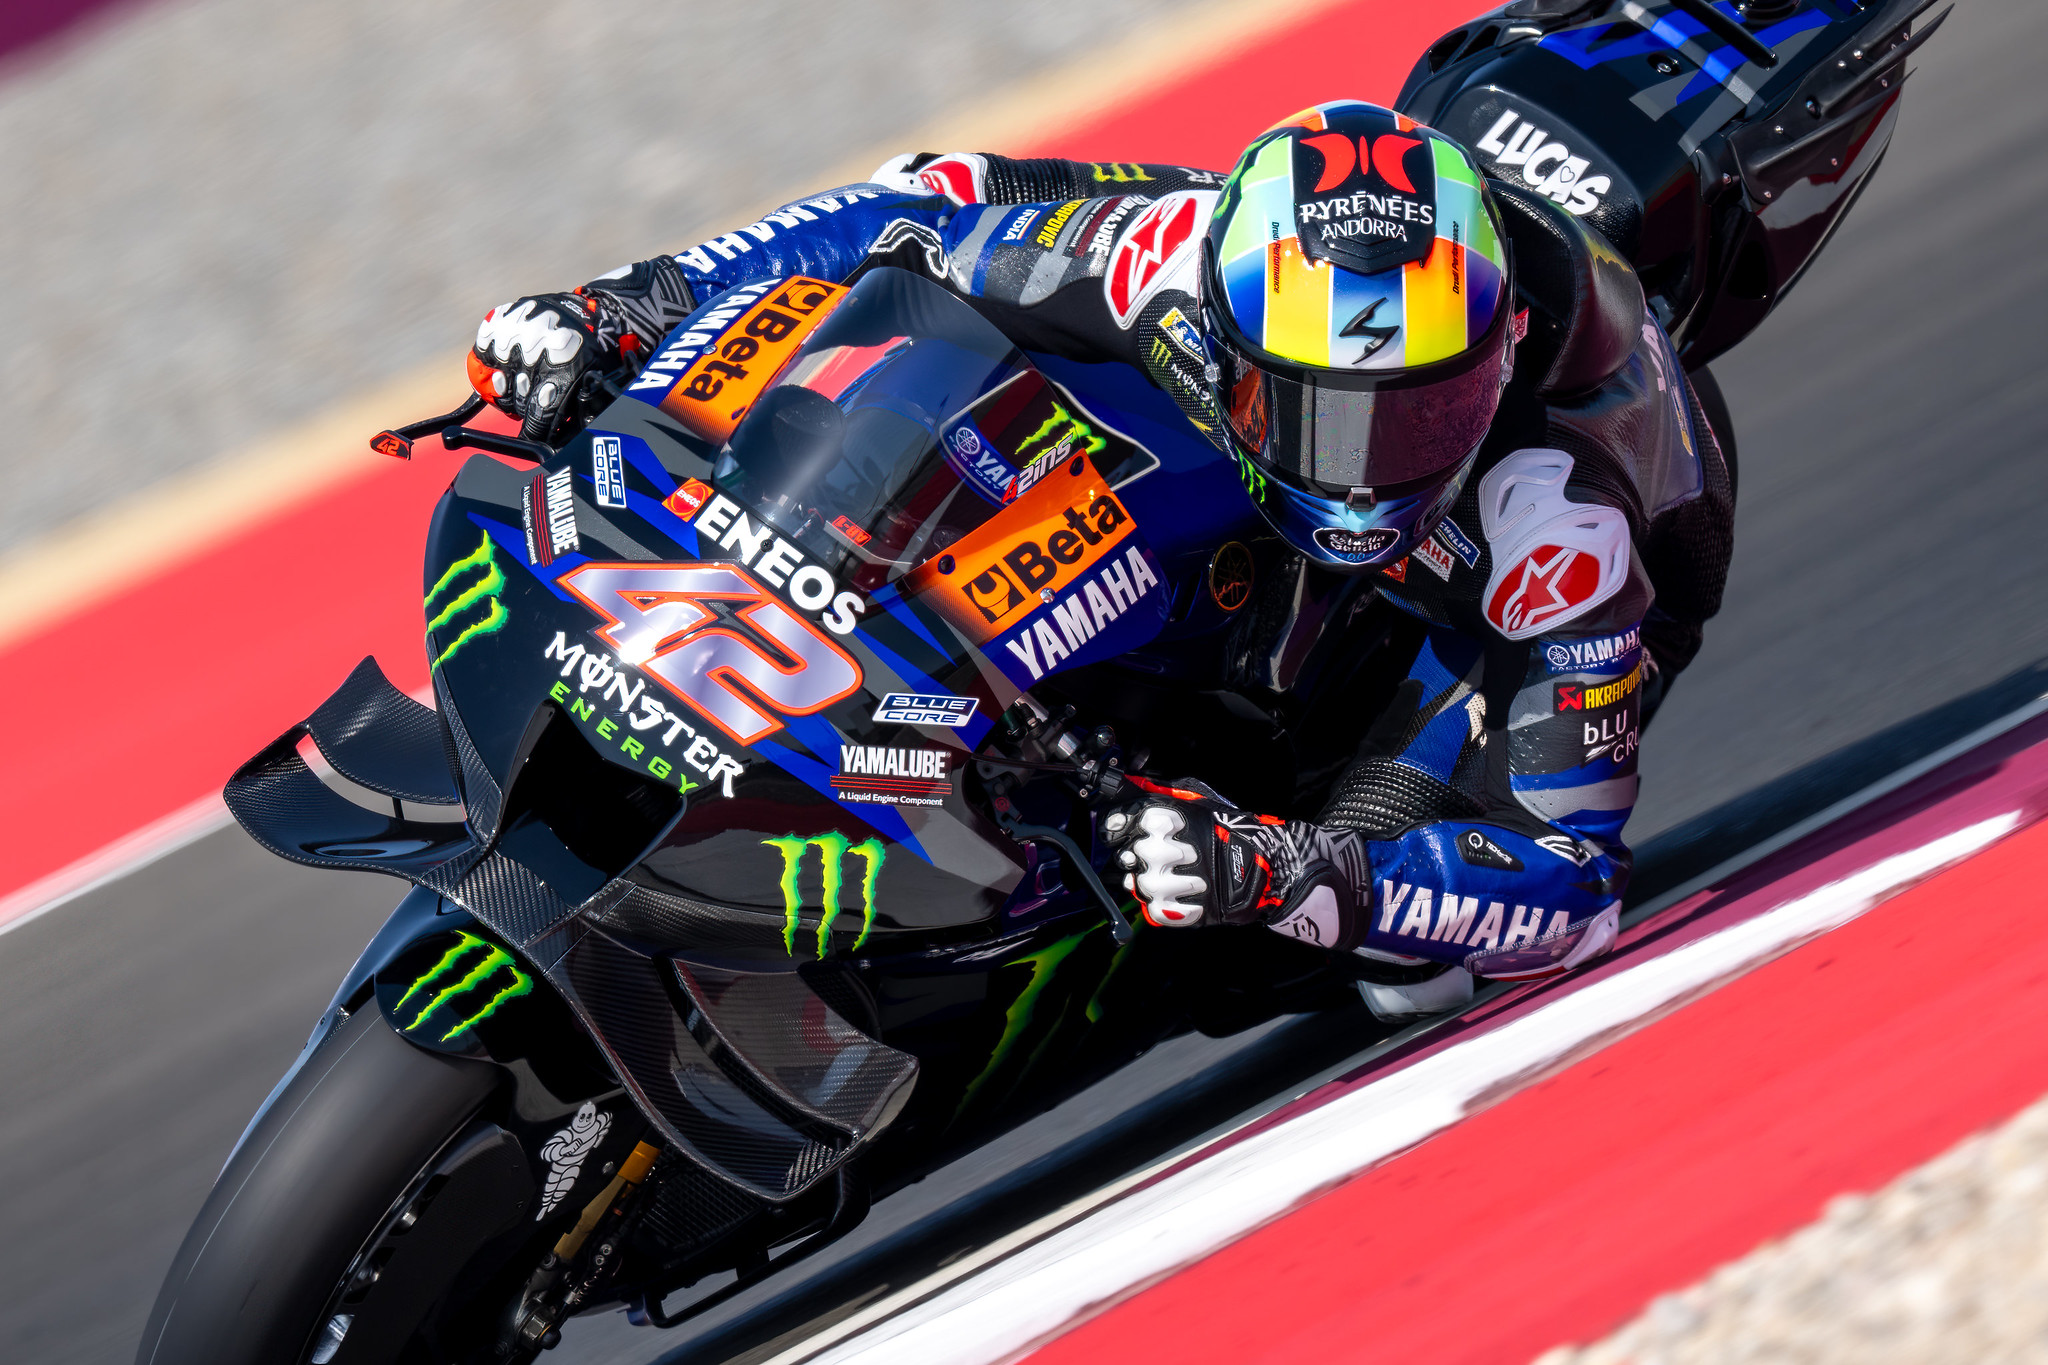 #42 Alex Rins - (SPA) - Monster Energy Yamaha MotoGP™ Team - Yamaha YZR-M1